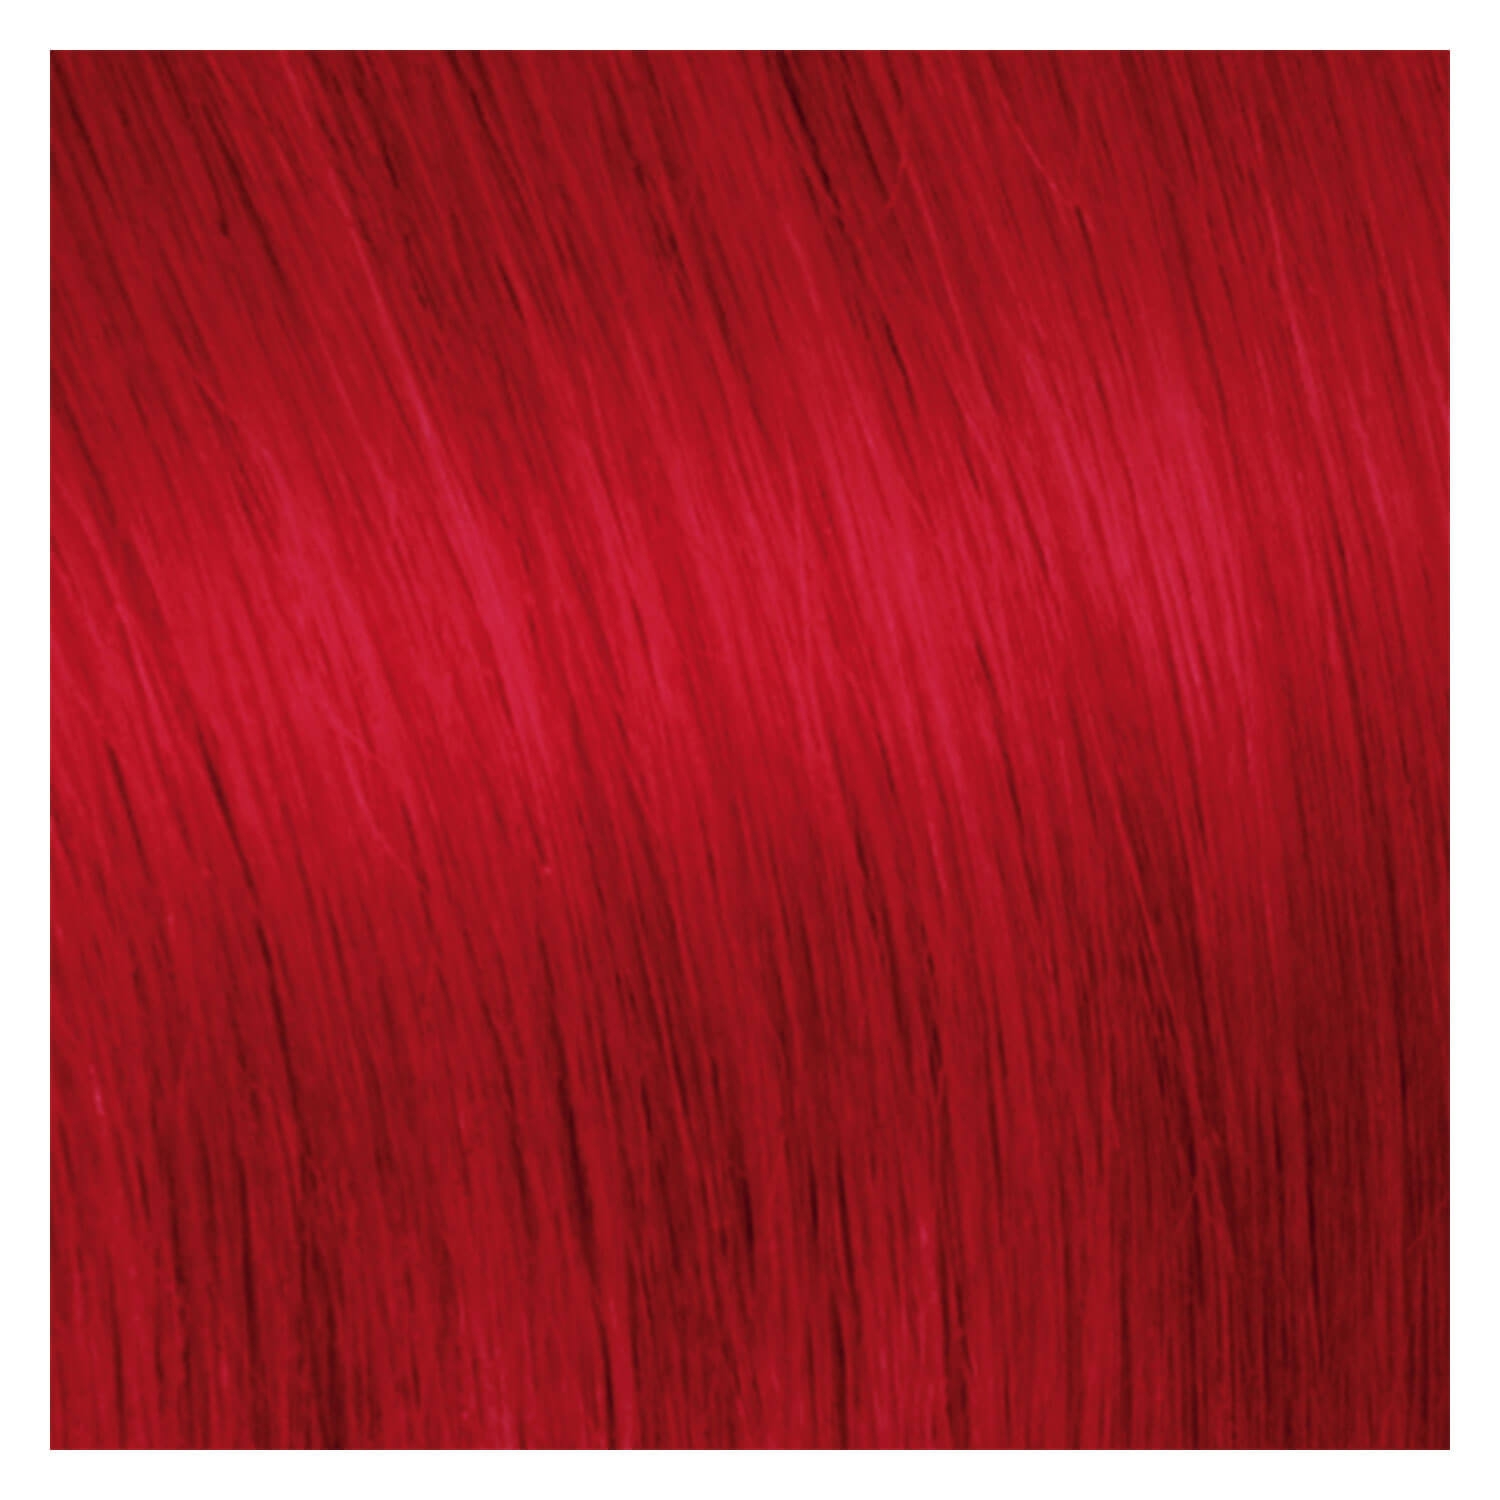 Produktbild von SHE Clip In-System Hair Extensions - Rot 40cm